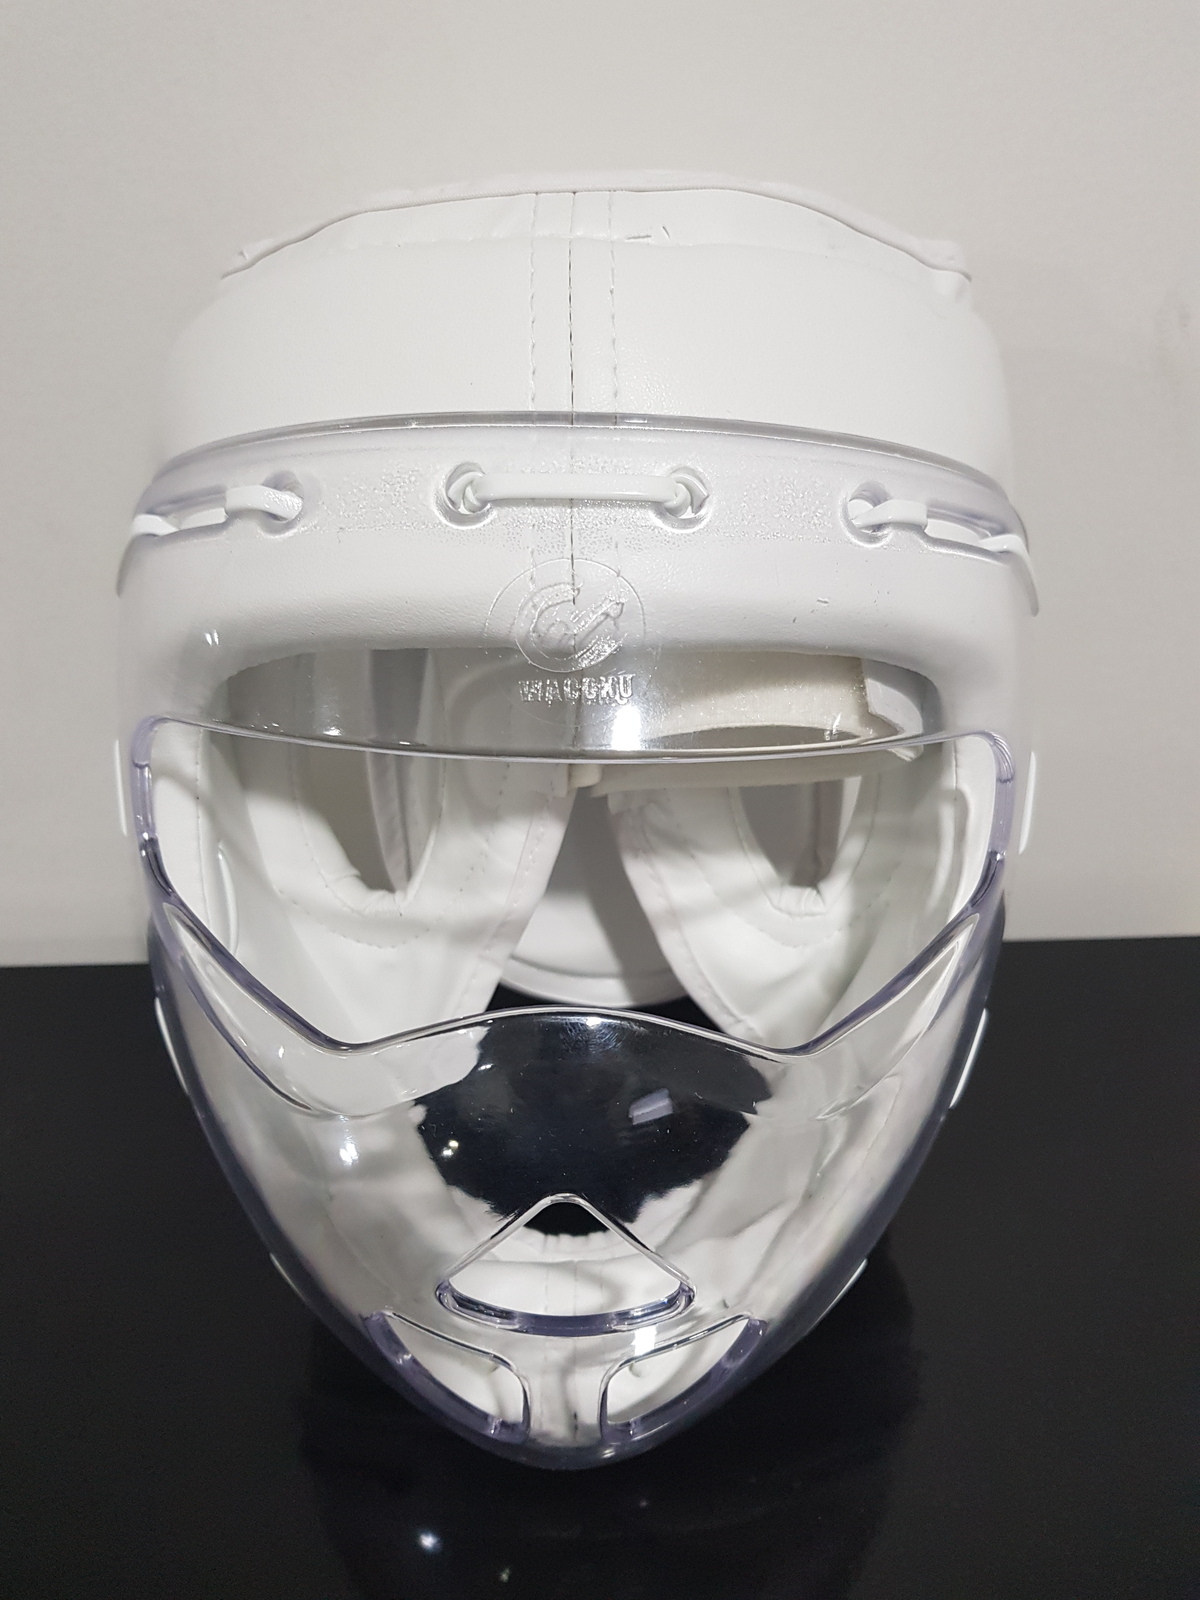 WACOKU - PU Head Gear/Guard - Attached Face Mask - Medium